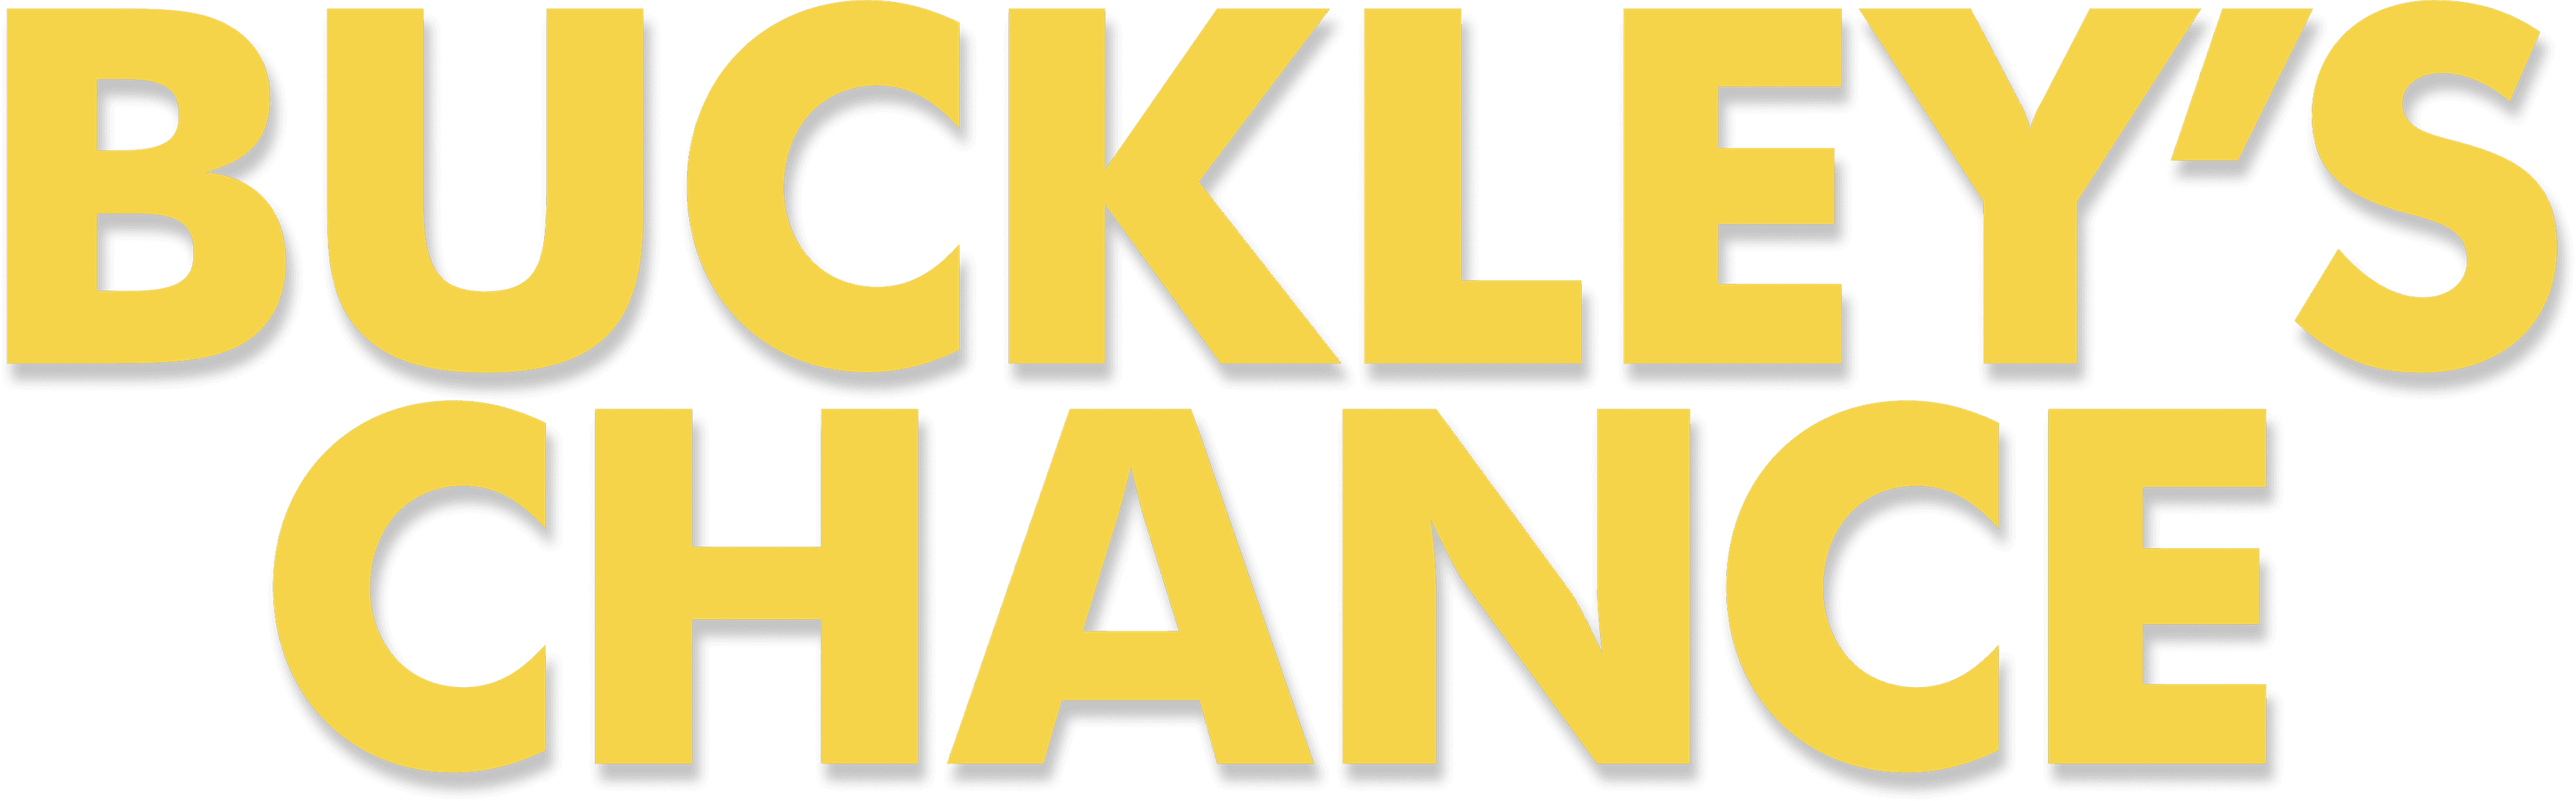 Buckley's Chance logo